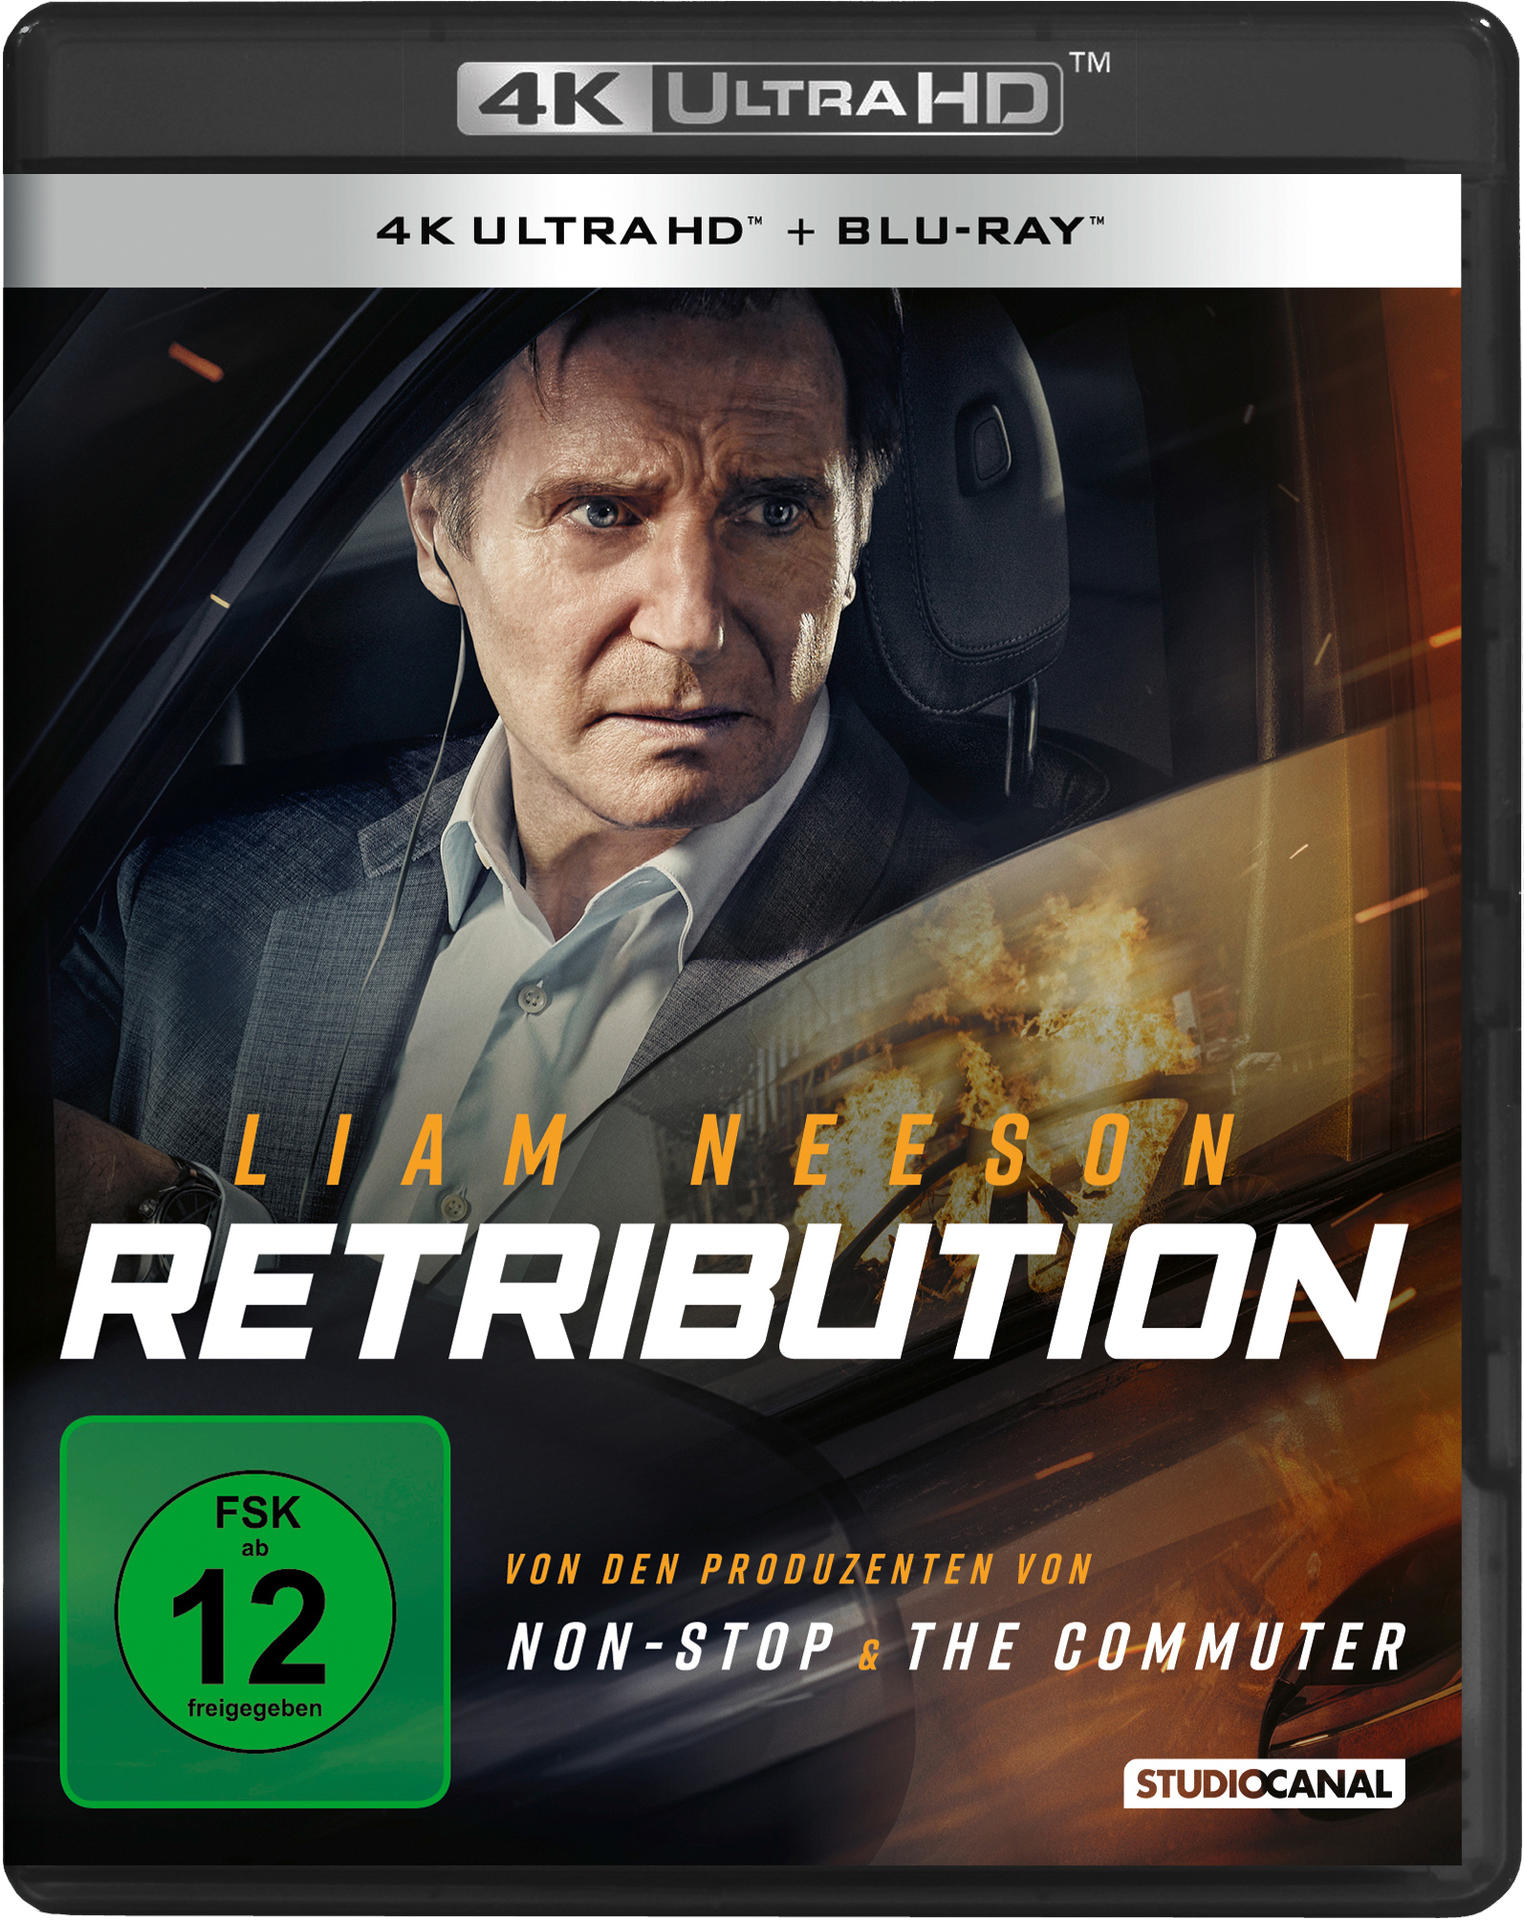 Blu-ray Blu-ray HD Ultra 4K Retribution +